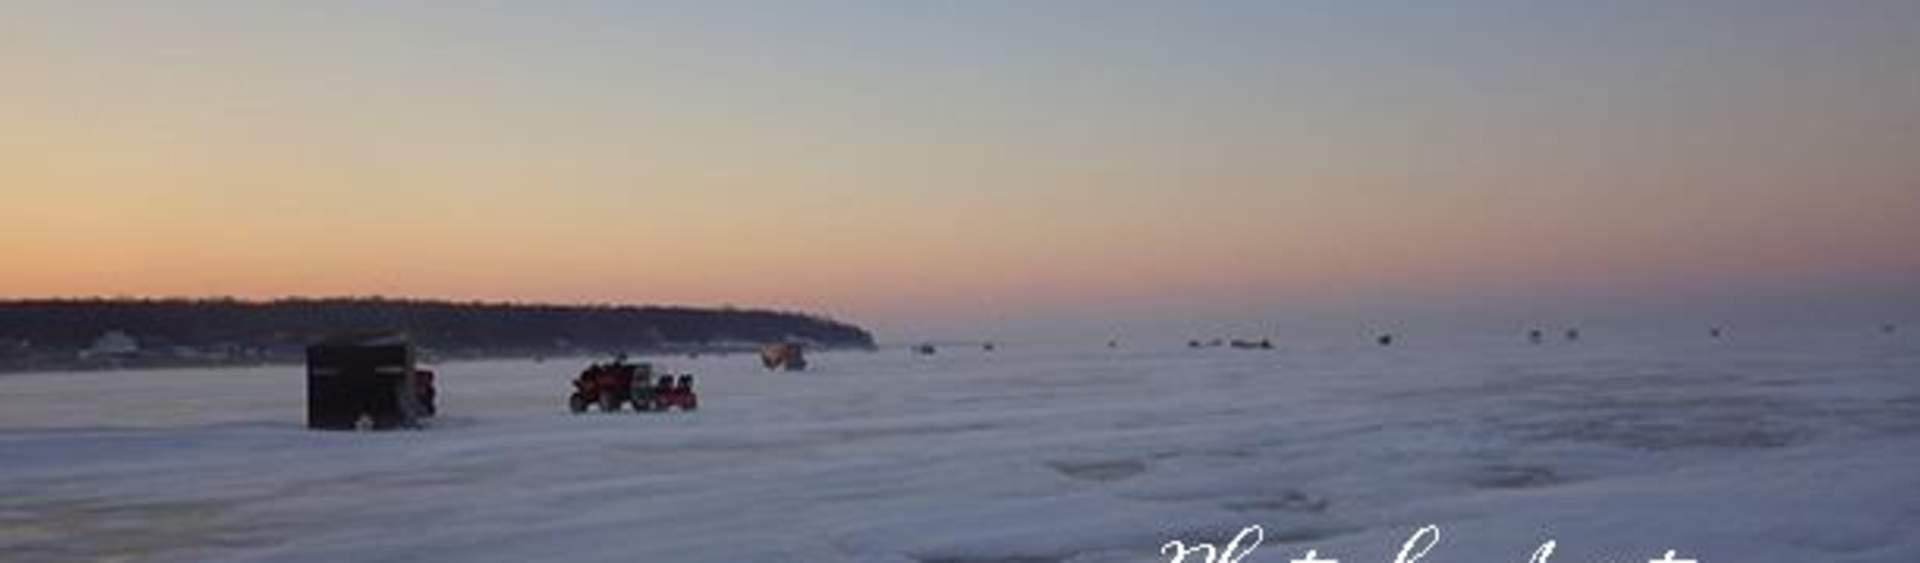 Lake Erie Ice Fishing with Captain Jerry Tucholski